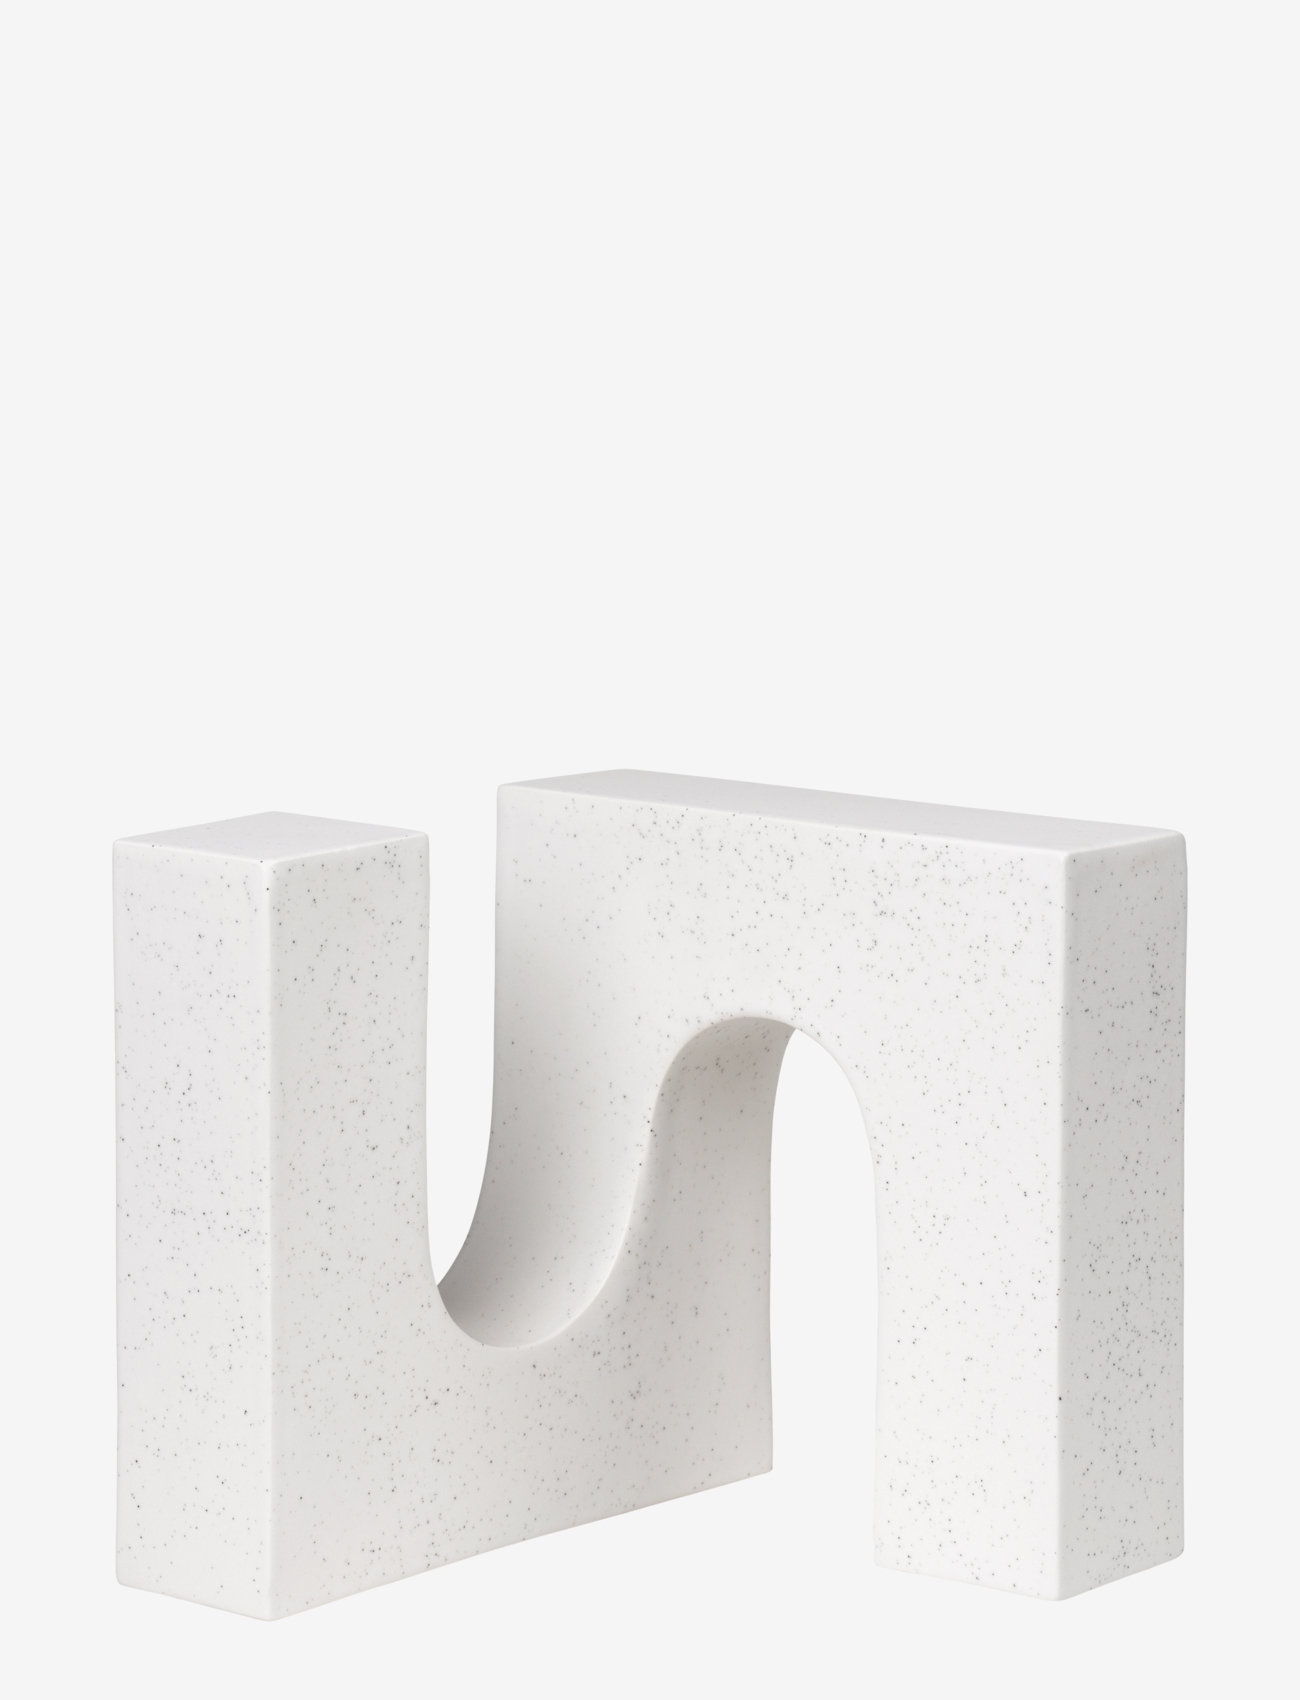 Kristina Dam Studio - Brick Sculpture - porzellanfiguren- & skulpturen - ceramic - 0